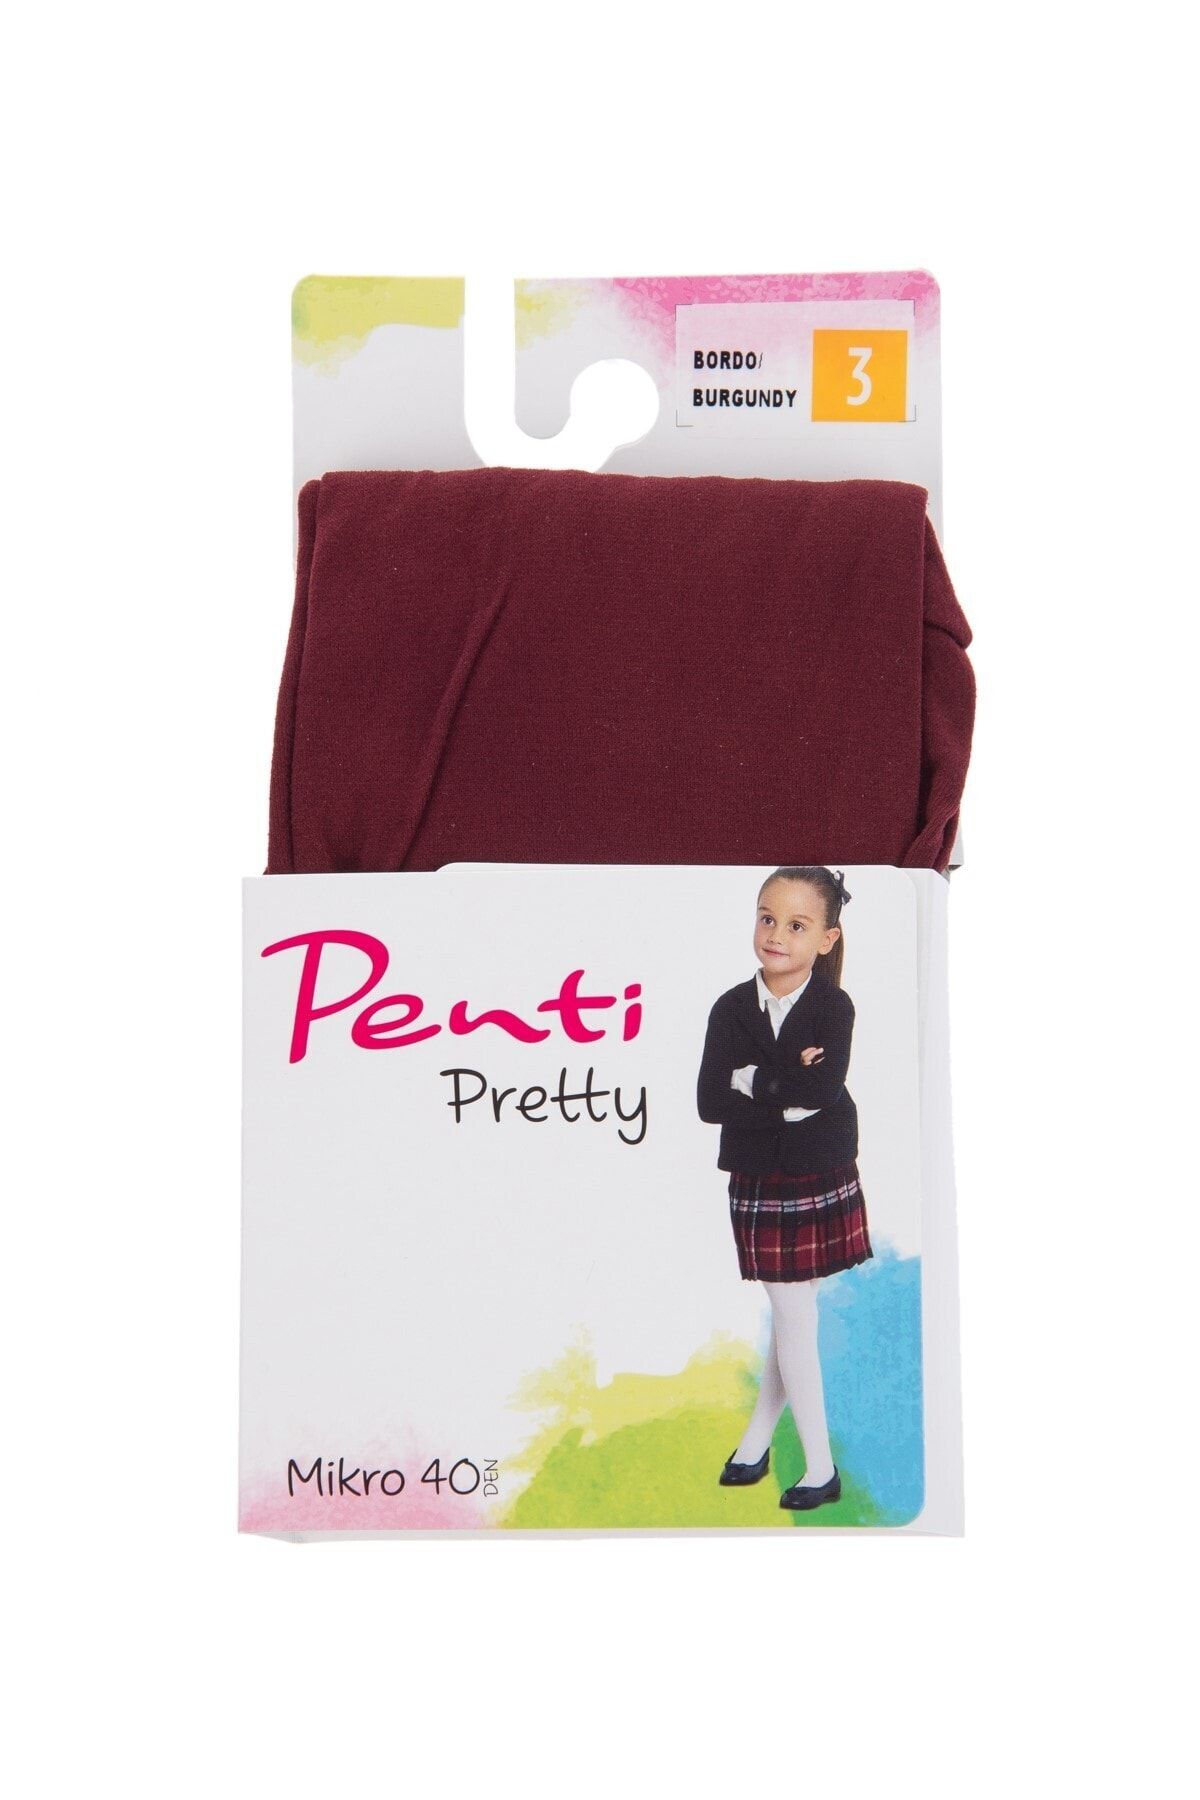 Penti Pretty Bordo Mikro 40 Kız Çocuk Külotlu Çorap | Pclpp46g19s-71